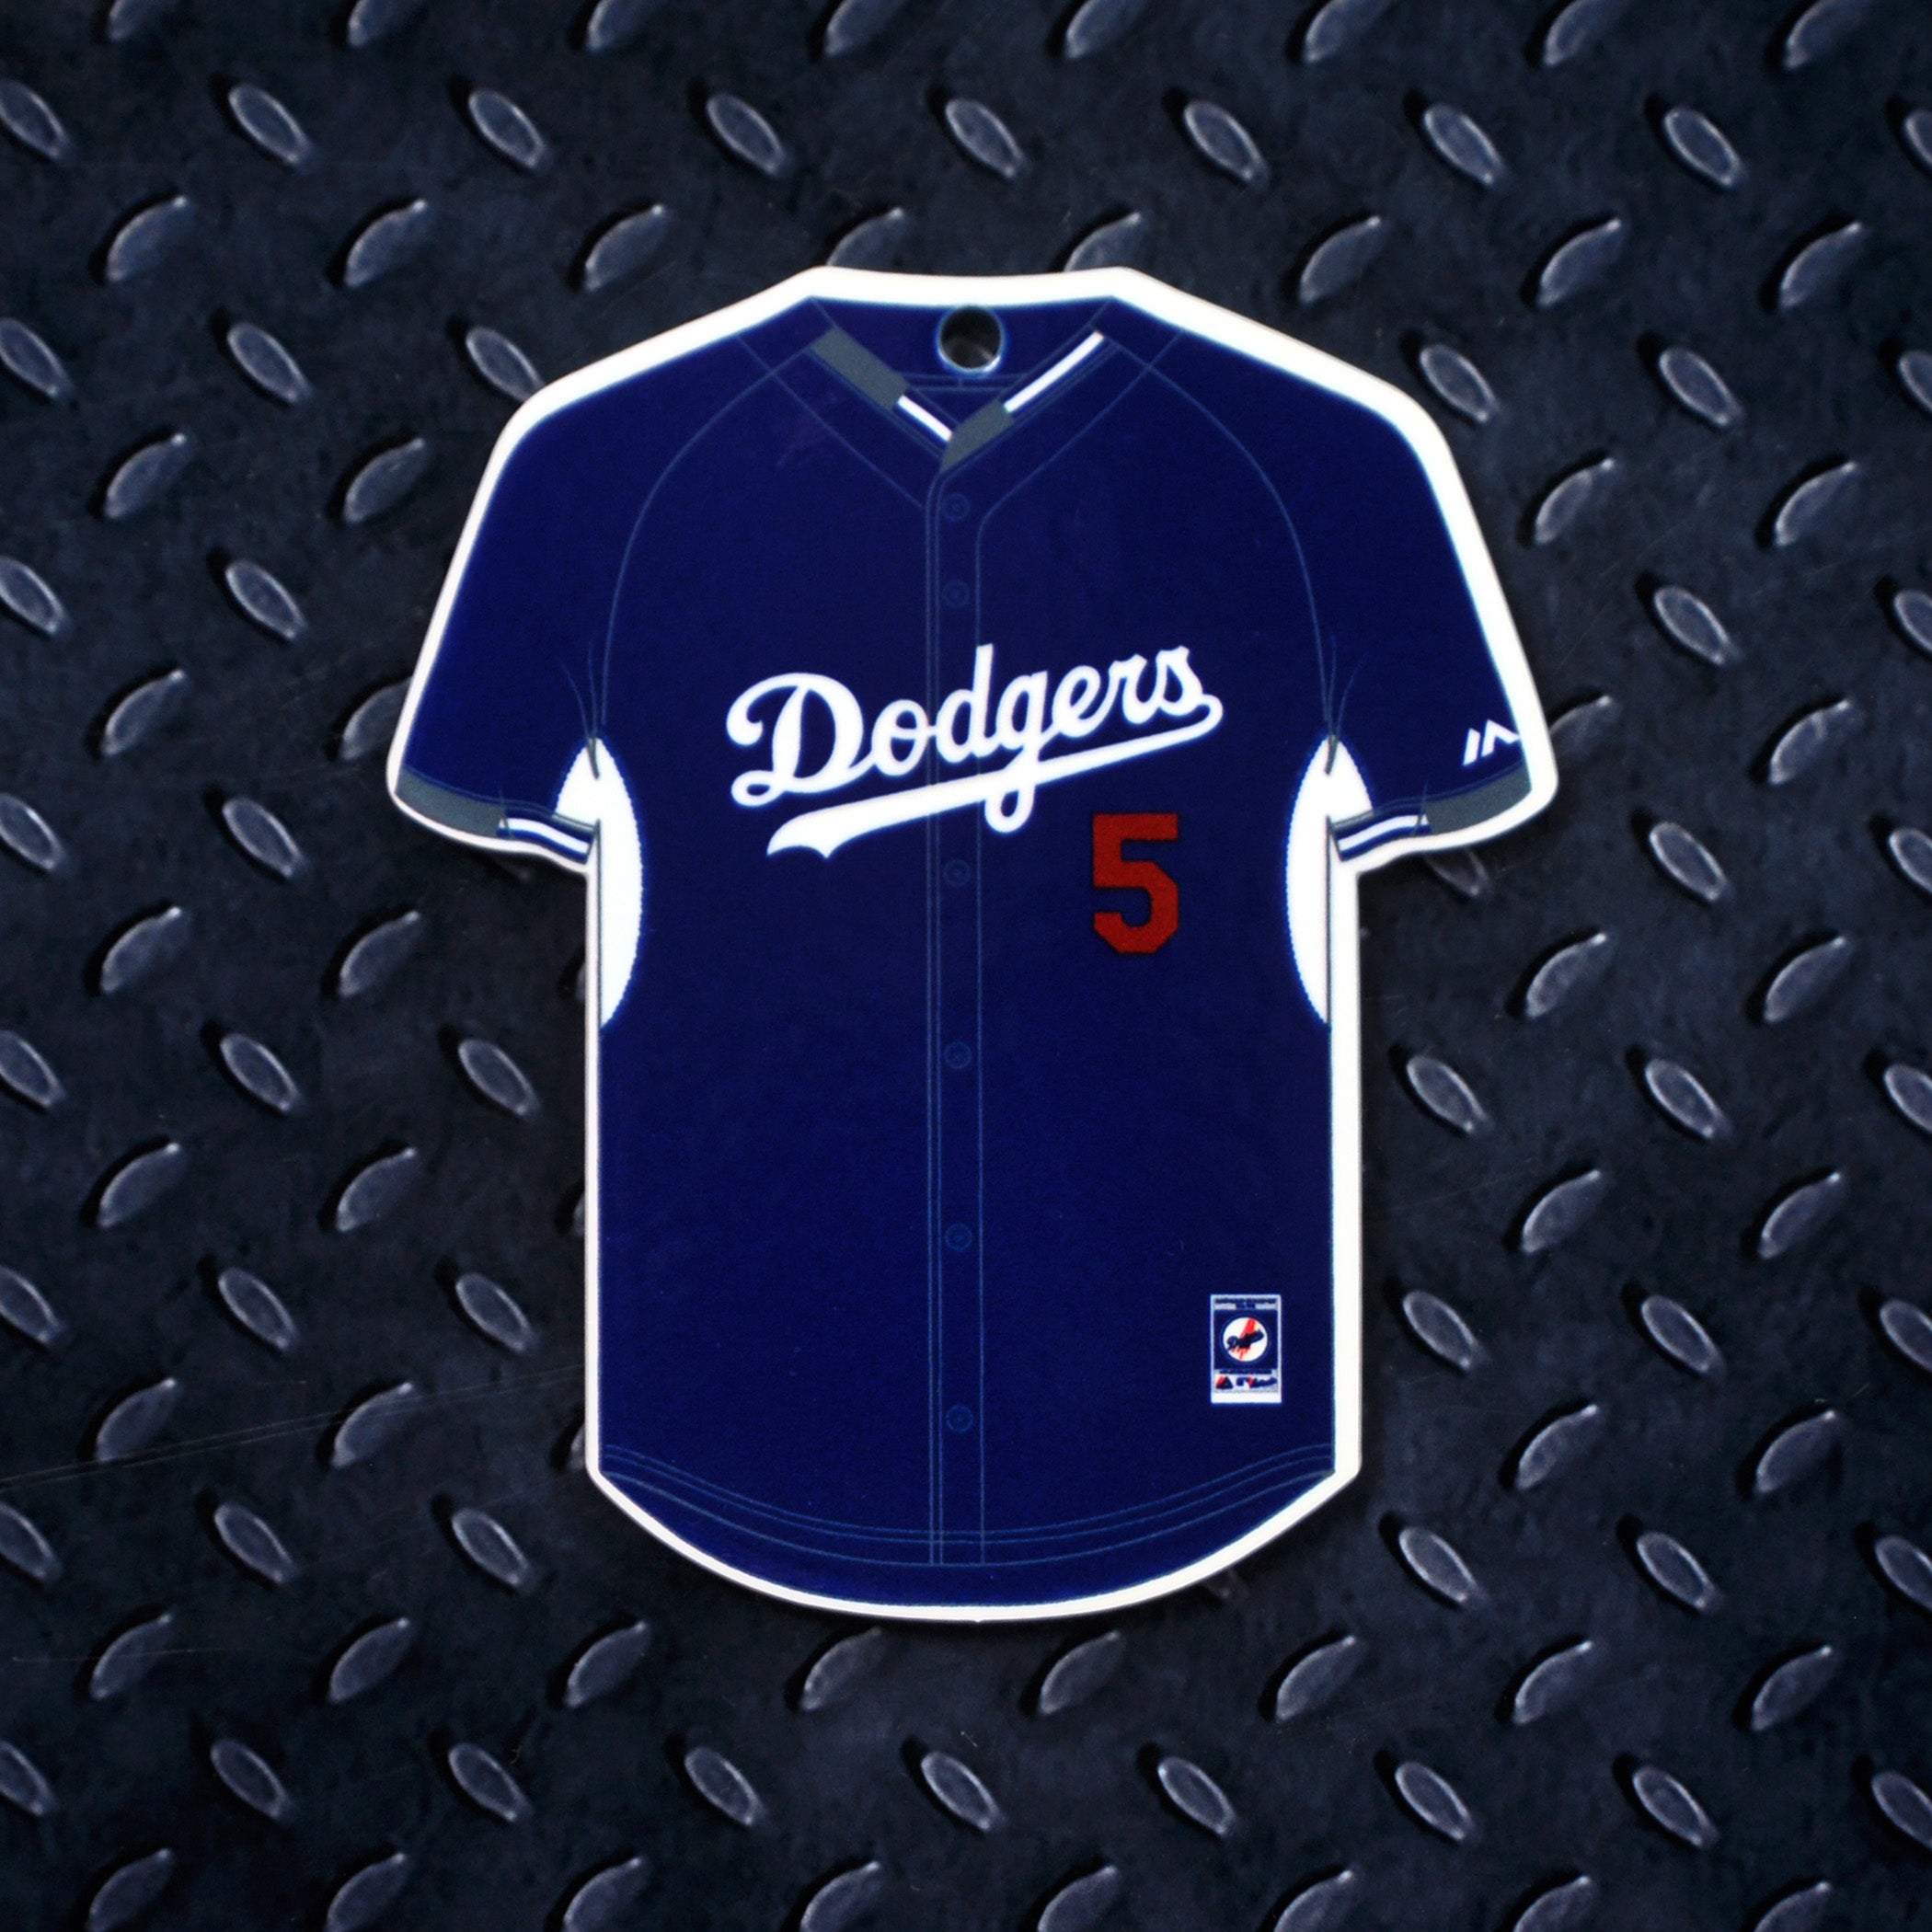 Los Angeles Kings Wear Dodgers-Inspired Uniforms